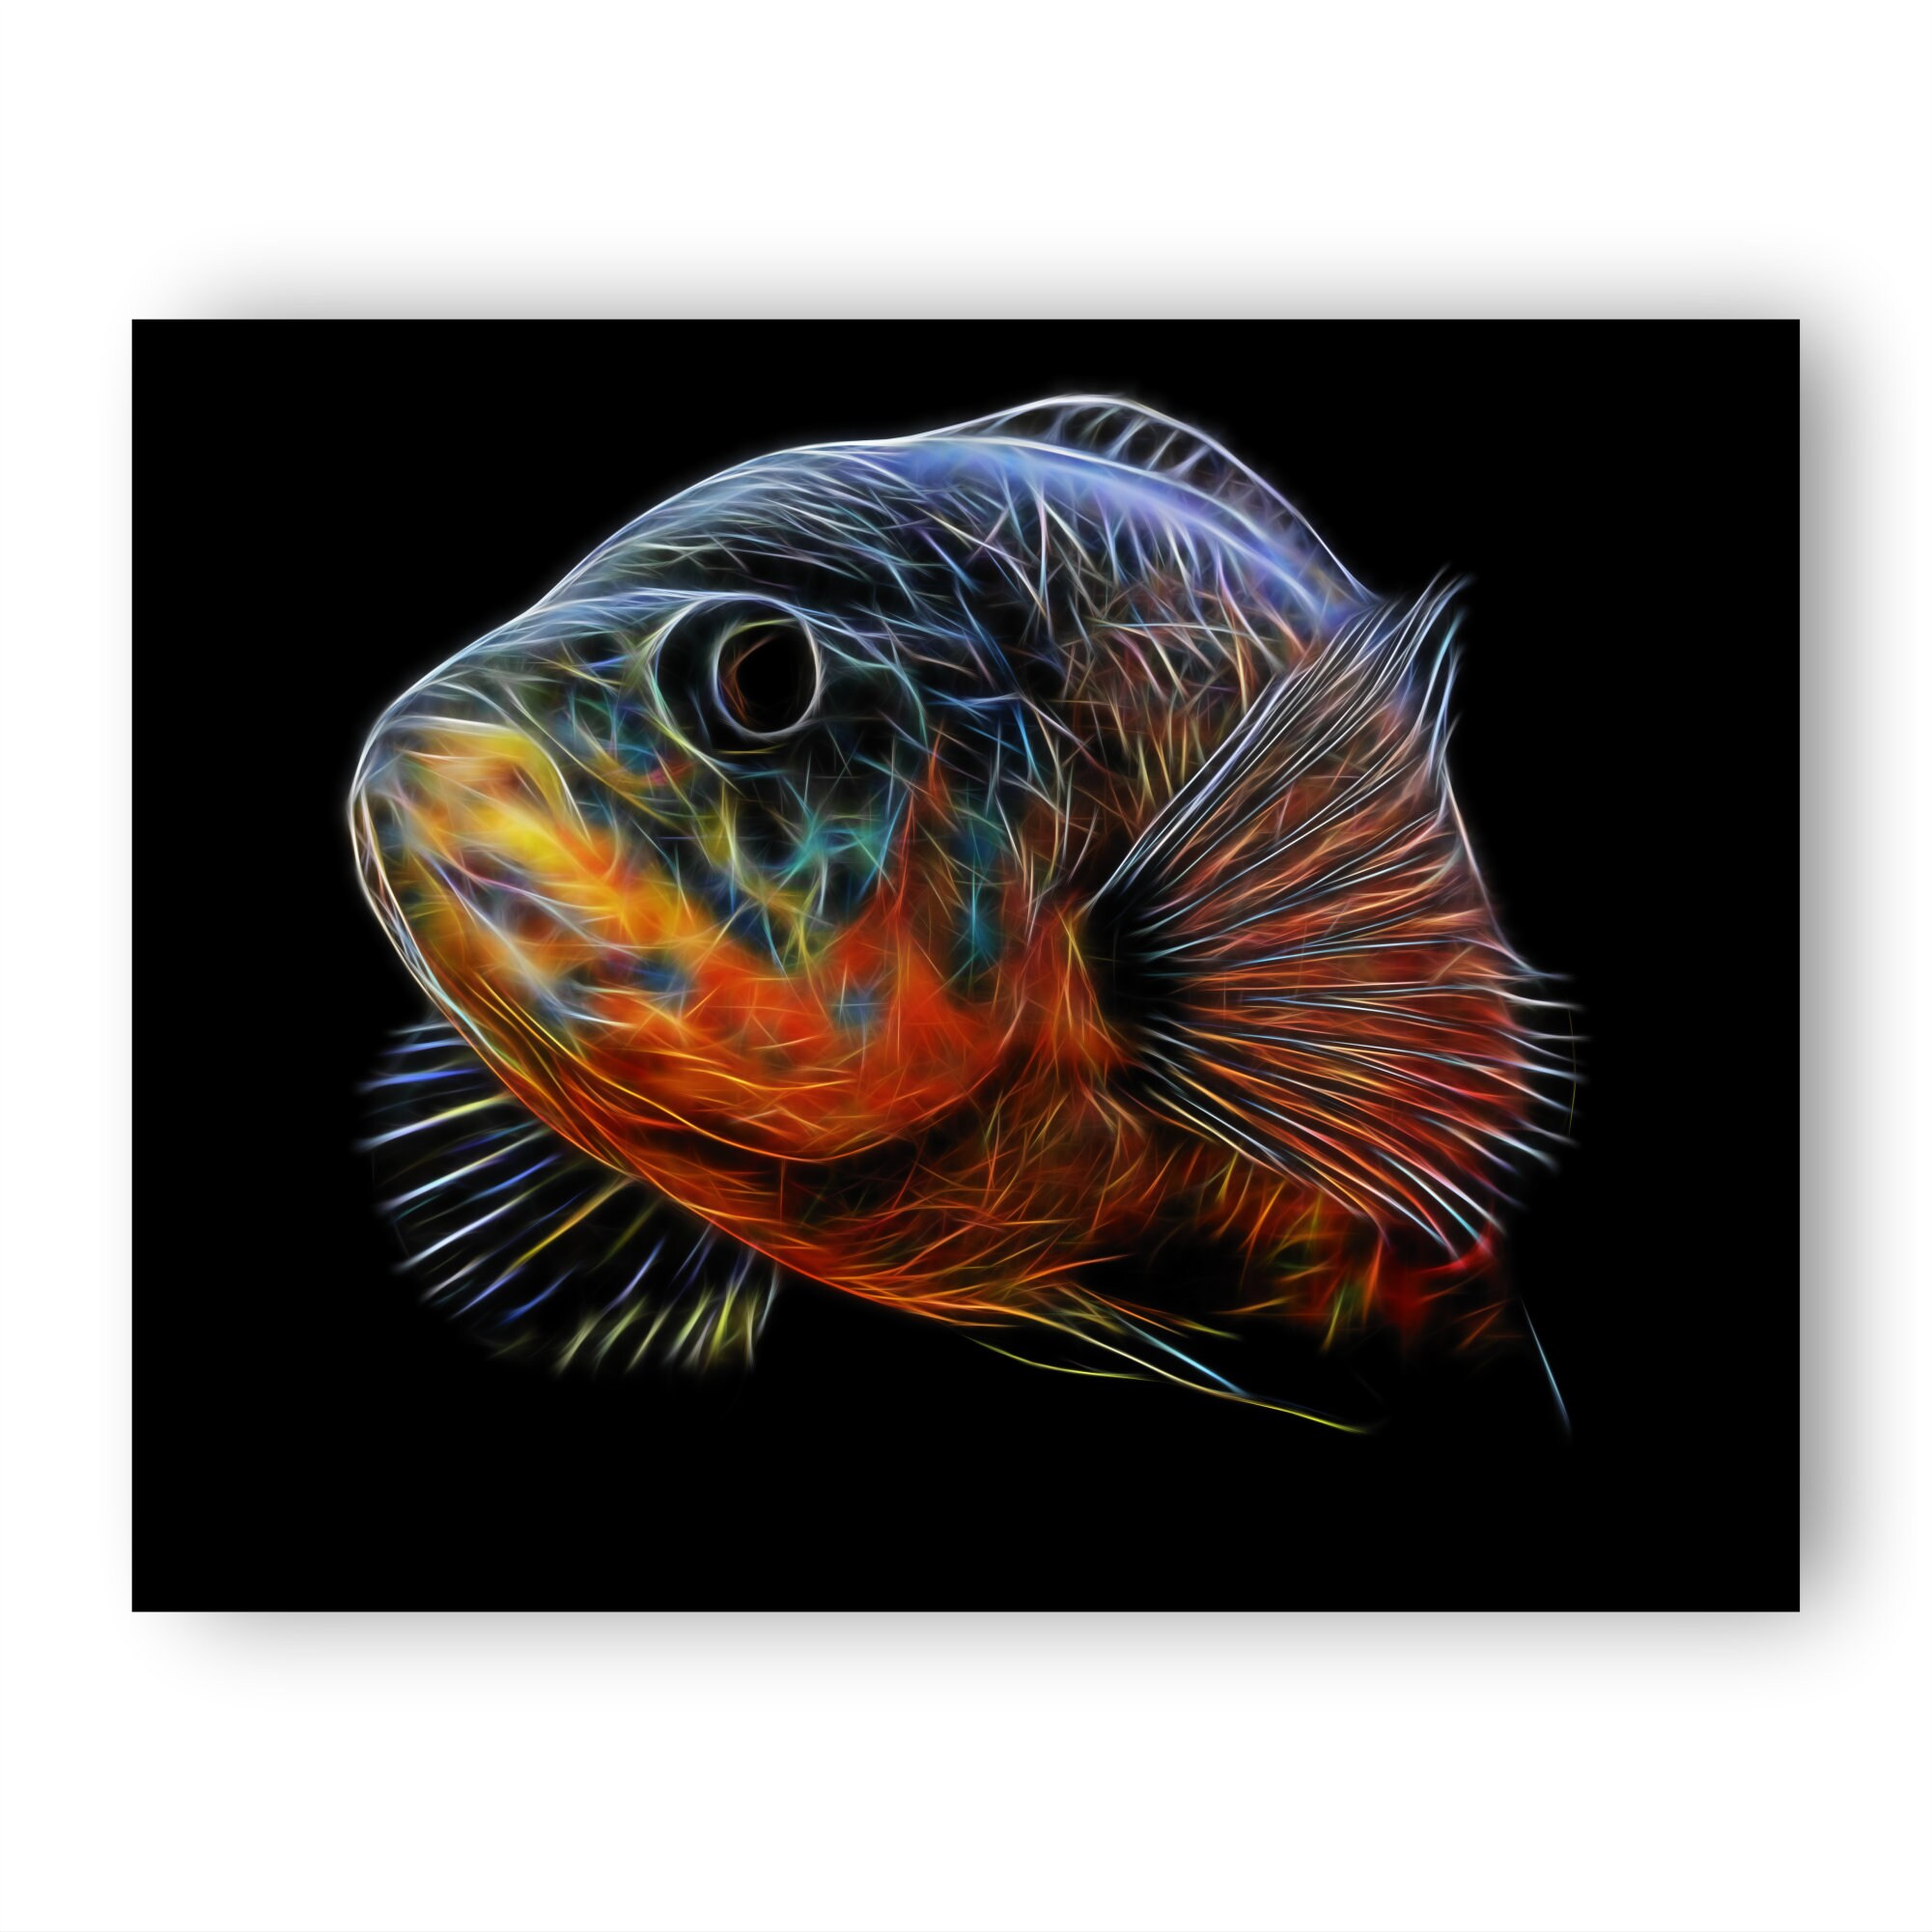 Tiger Oscar Fish Print With Stunning Fractal Art Design. 